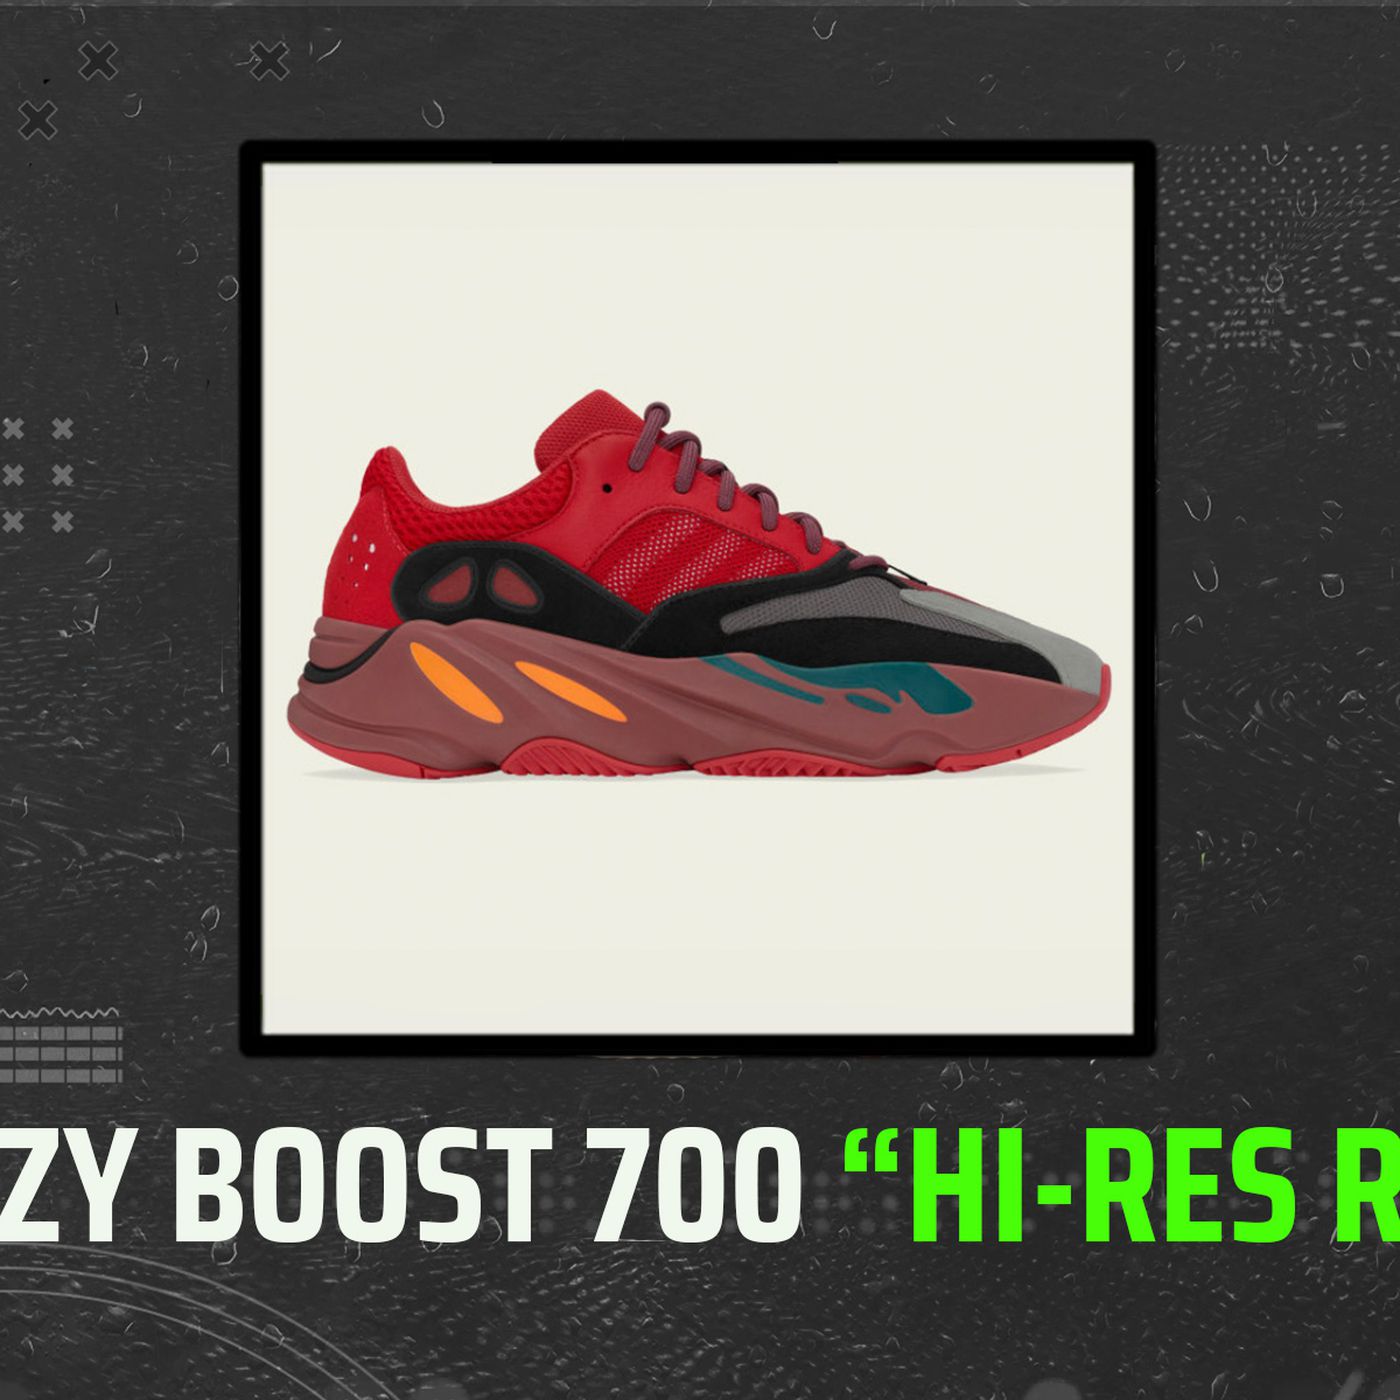 Reflectie Geheugen Vervolgen Yeezy Boost 700 Hi-Res Red: Sneaker Release Date, Price, Where To Buy -  DraftKings Network